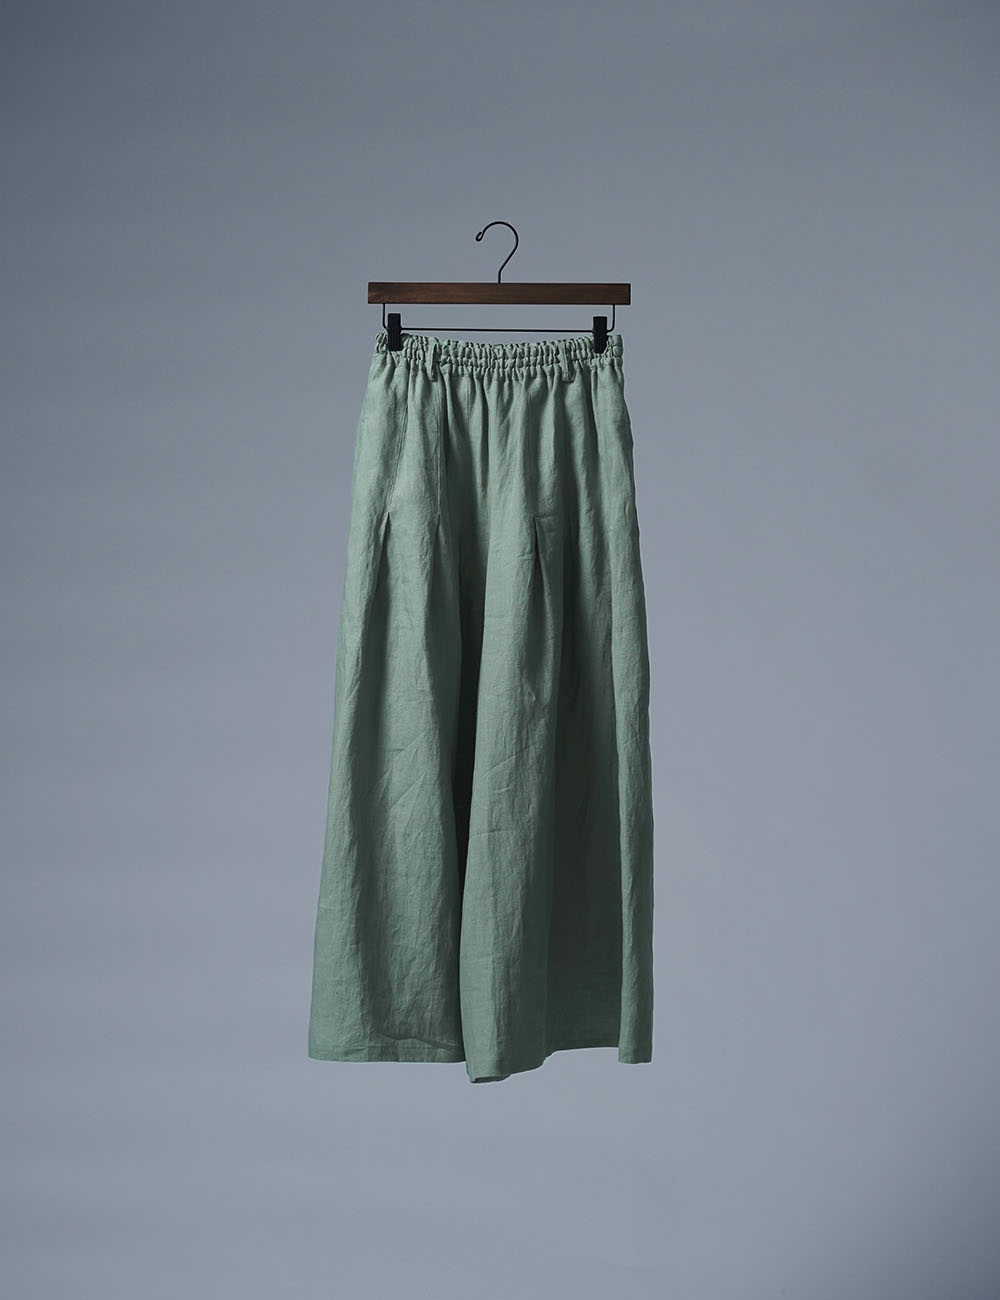 【wafu】Linen Pants 袴(はかま)パンツ/青磁鼠(せいじねず) b002k-snz1